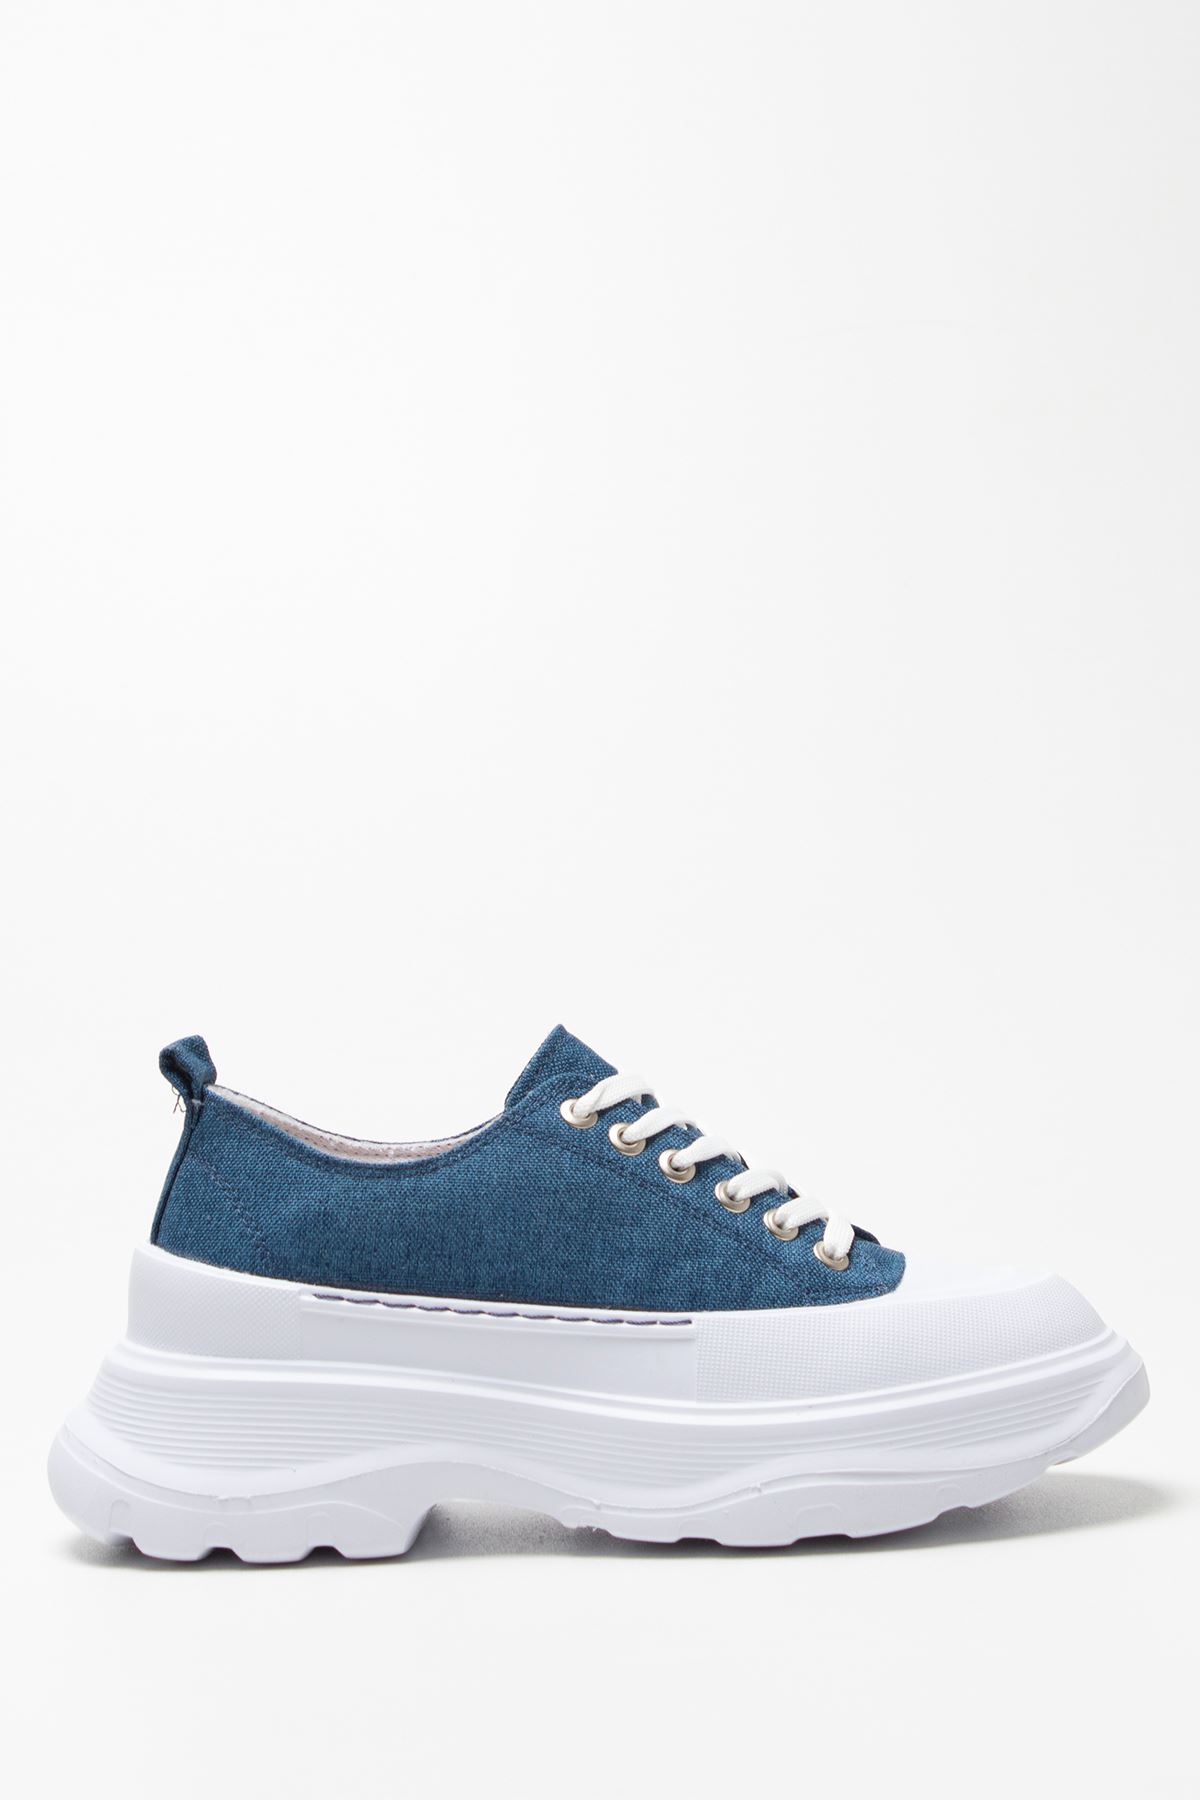 Wasp Kot Mavi Keten Kadın Sneakers